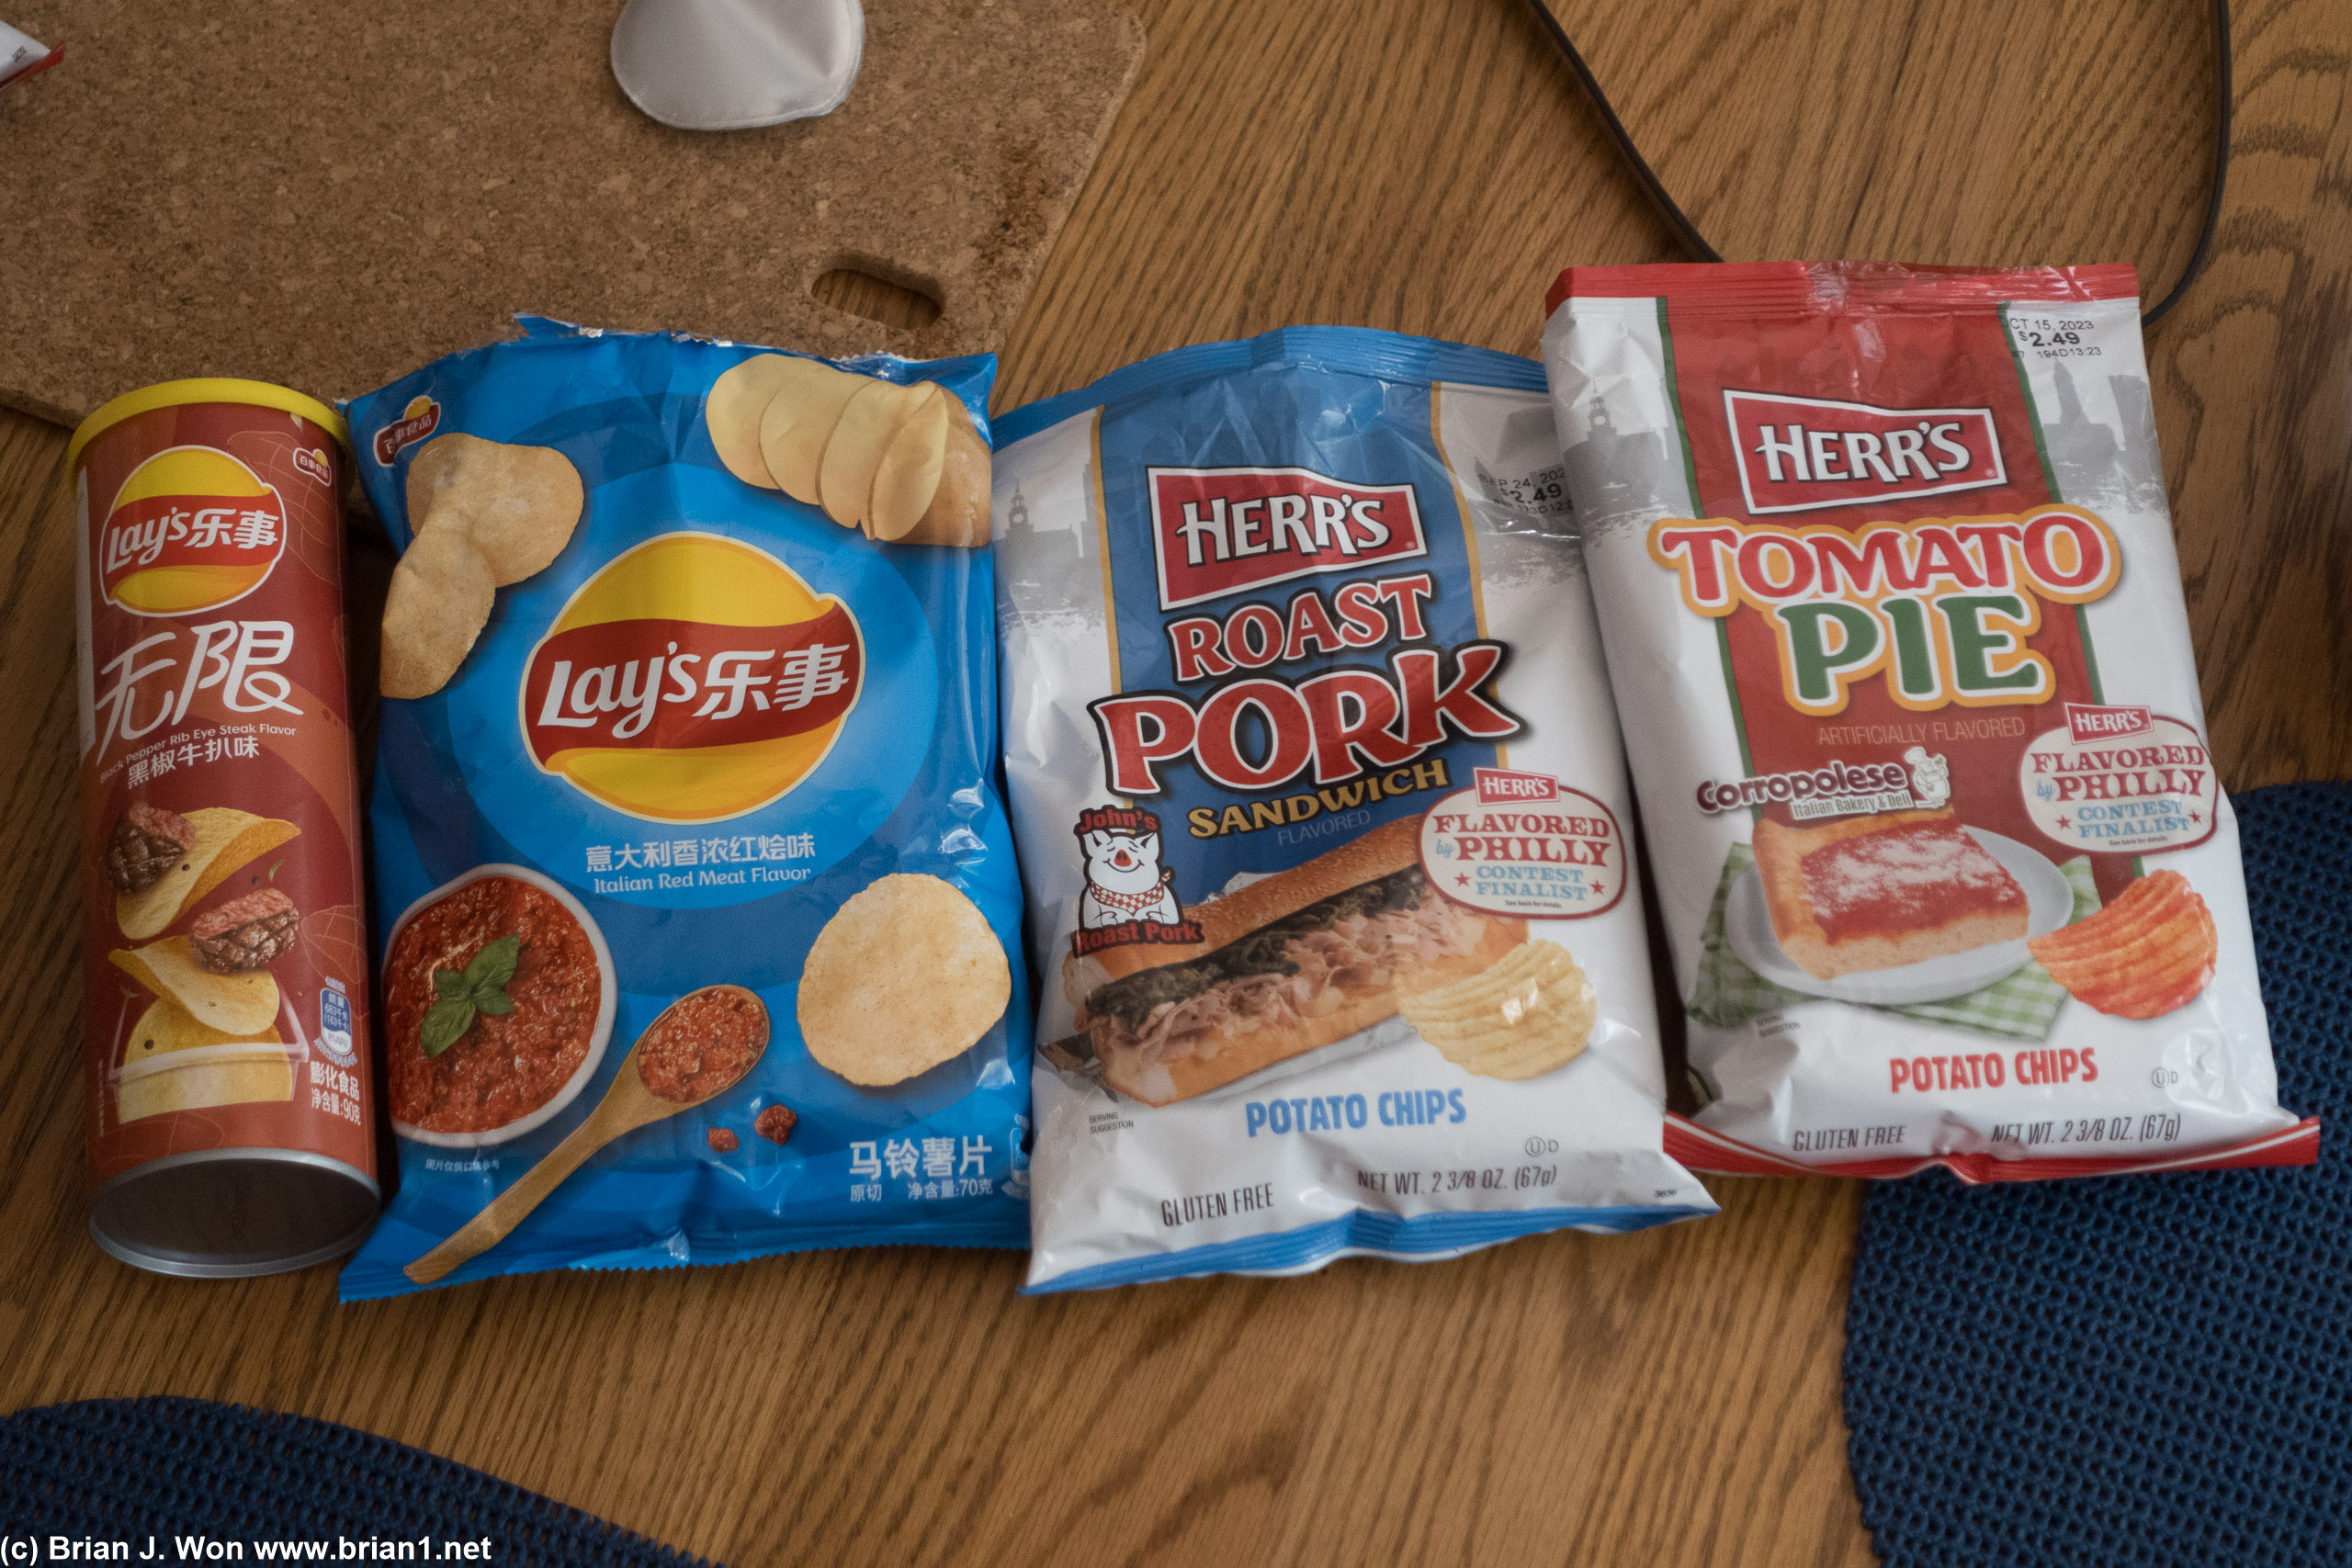 Plus Herr's potato chips from Pennsylvania. Tomato pie and roast pork were good.